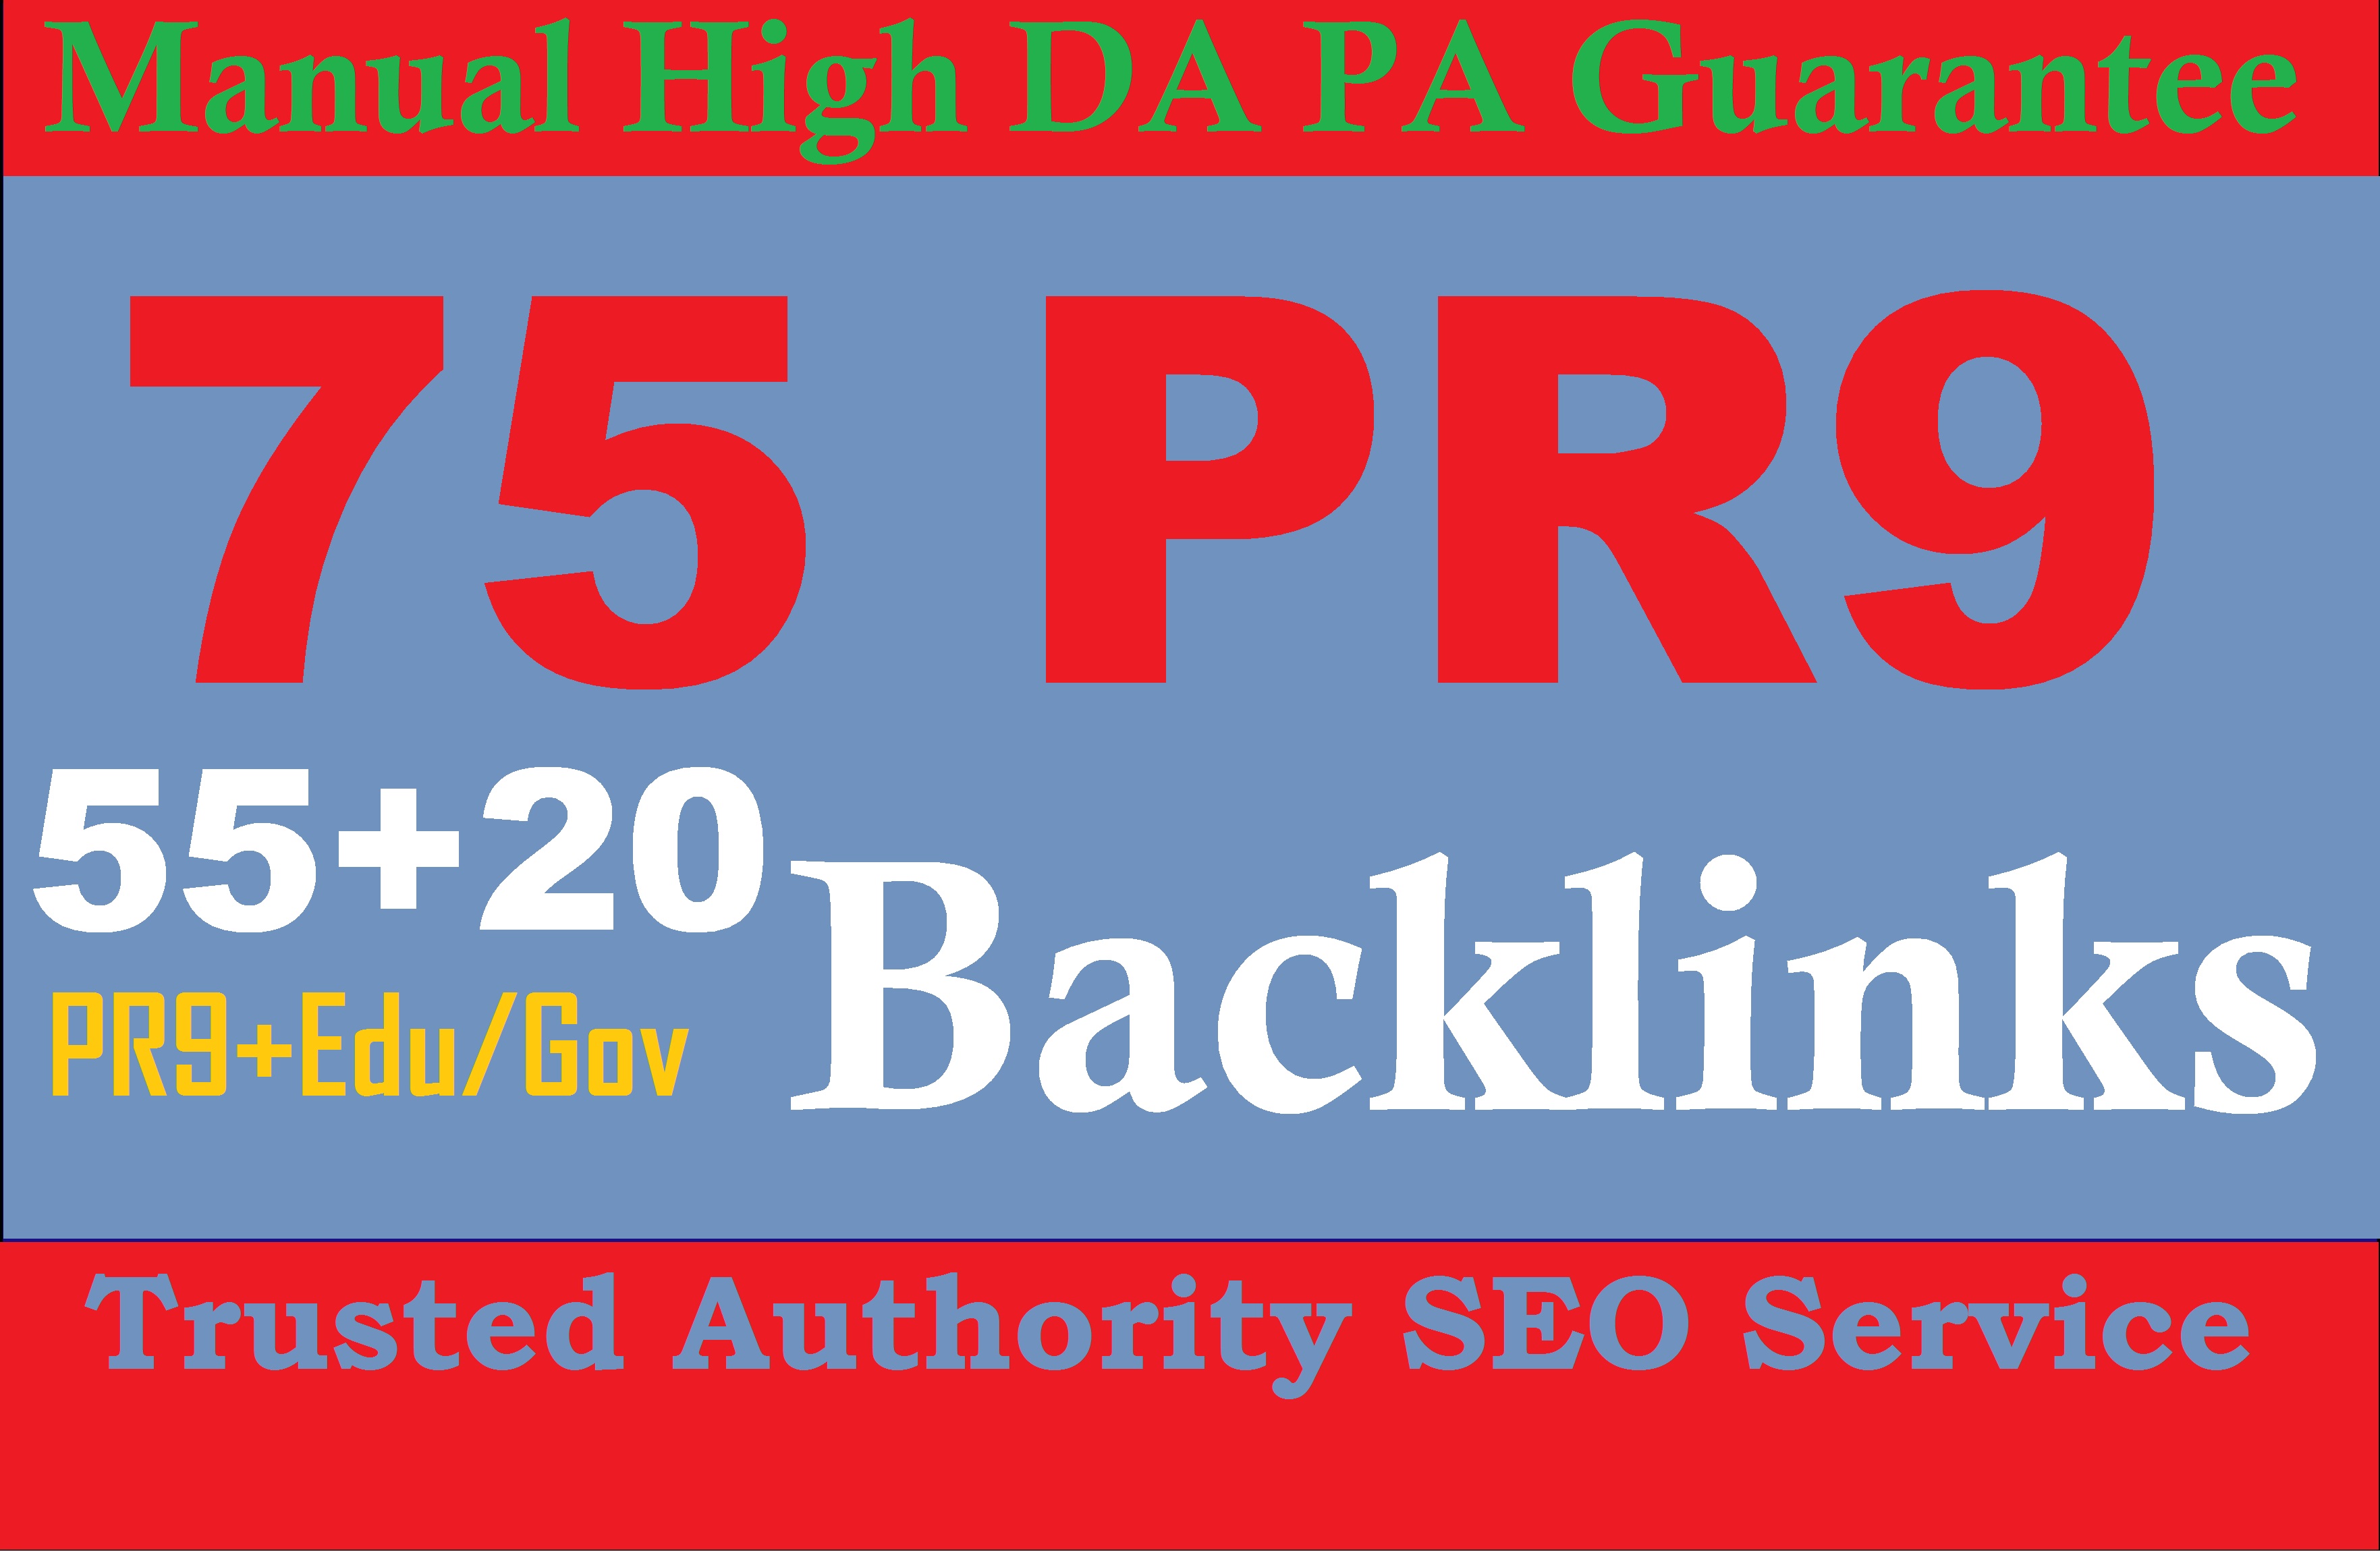 Exclusively_75 Backlinks 55 PR9 +20 EDU/GOV 80+DA Permanent SEO Links Improve Ranking